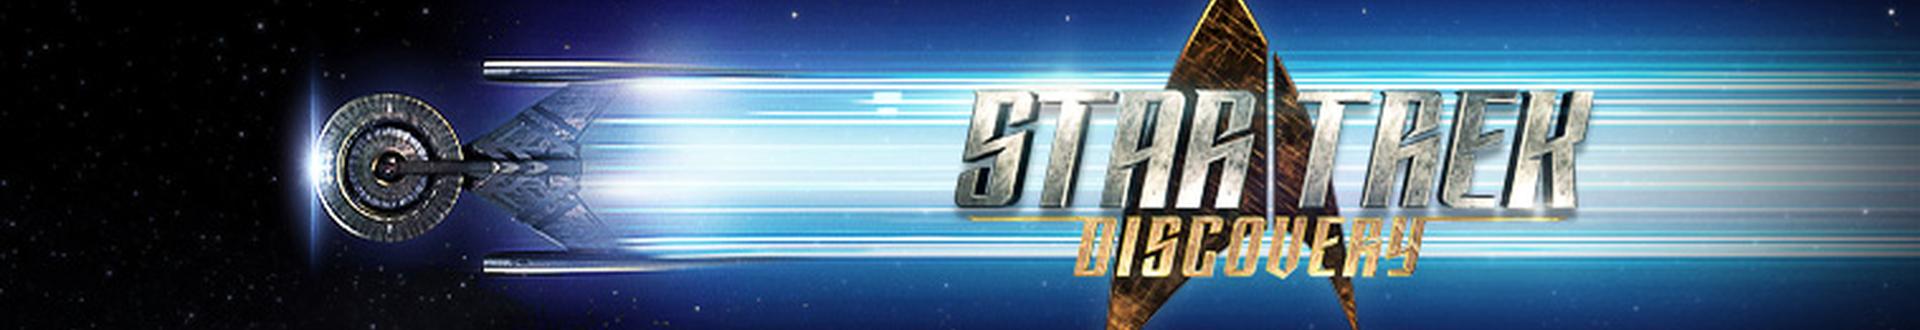 Image illustrative de Star Trek: Discovery